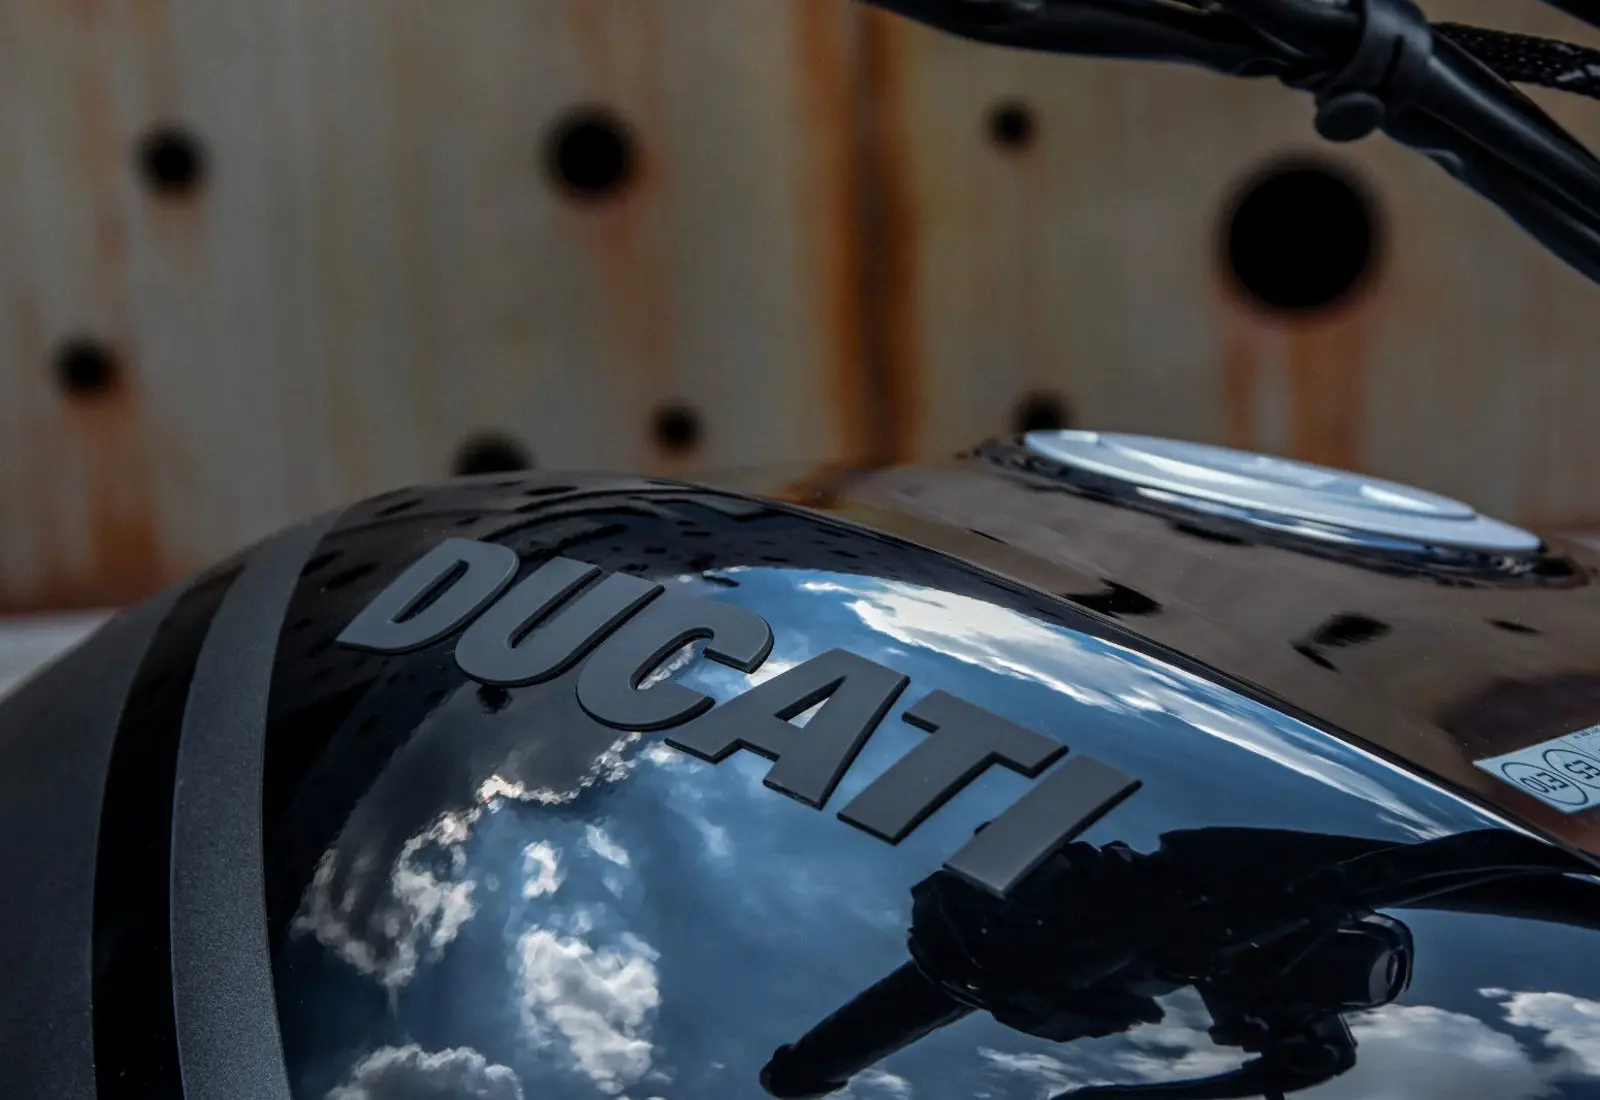 Ducati X-Diavel Nera * POLTRONA FRAU * 1 OF 500 * LIMITED ED - 41978